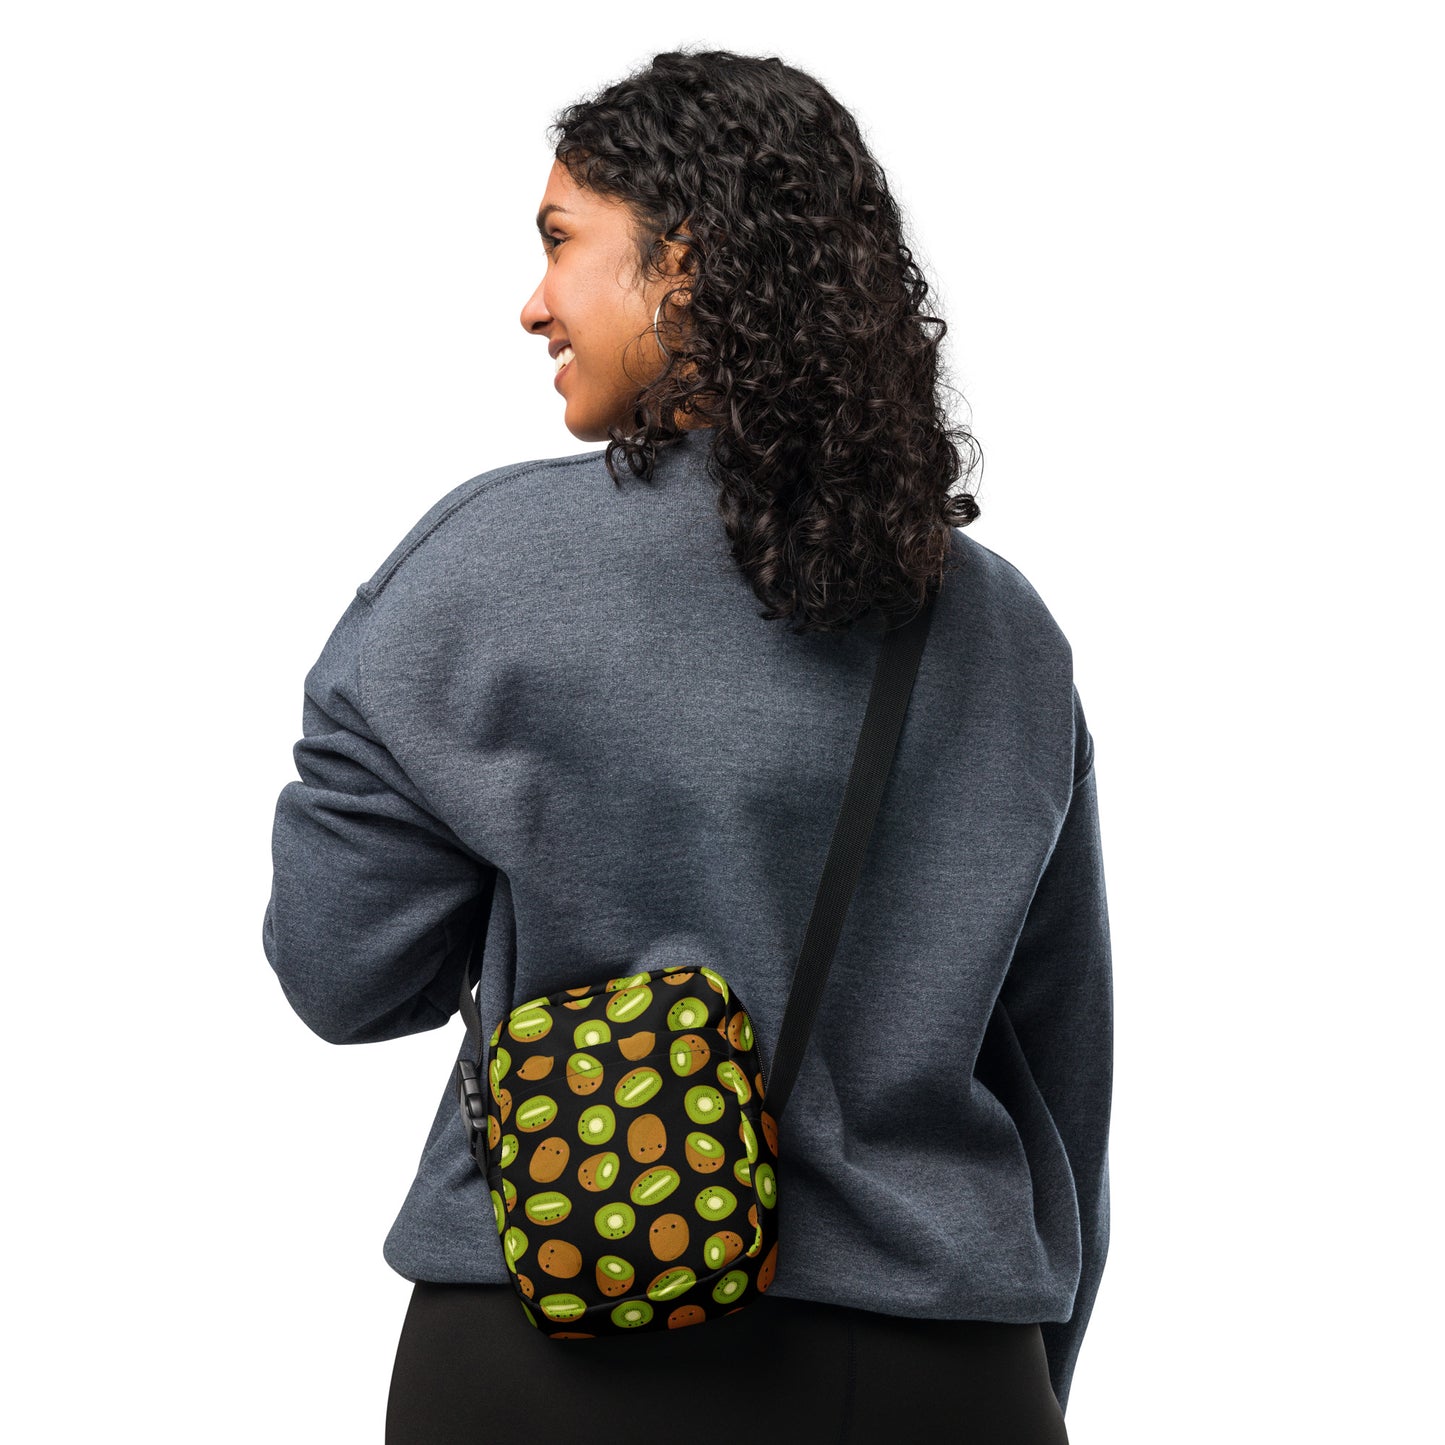 Kiwi Fruit - Utility crossbody bag Utility Cross Body Bag Food